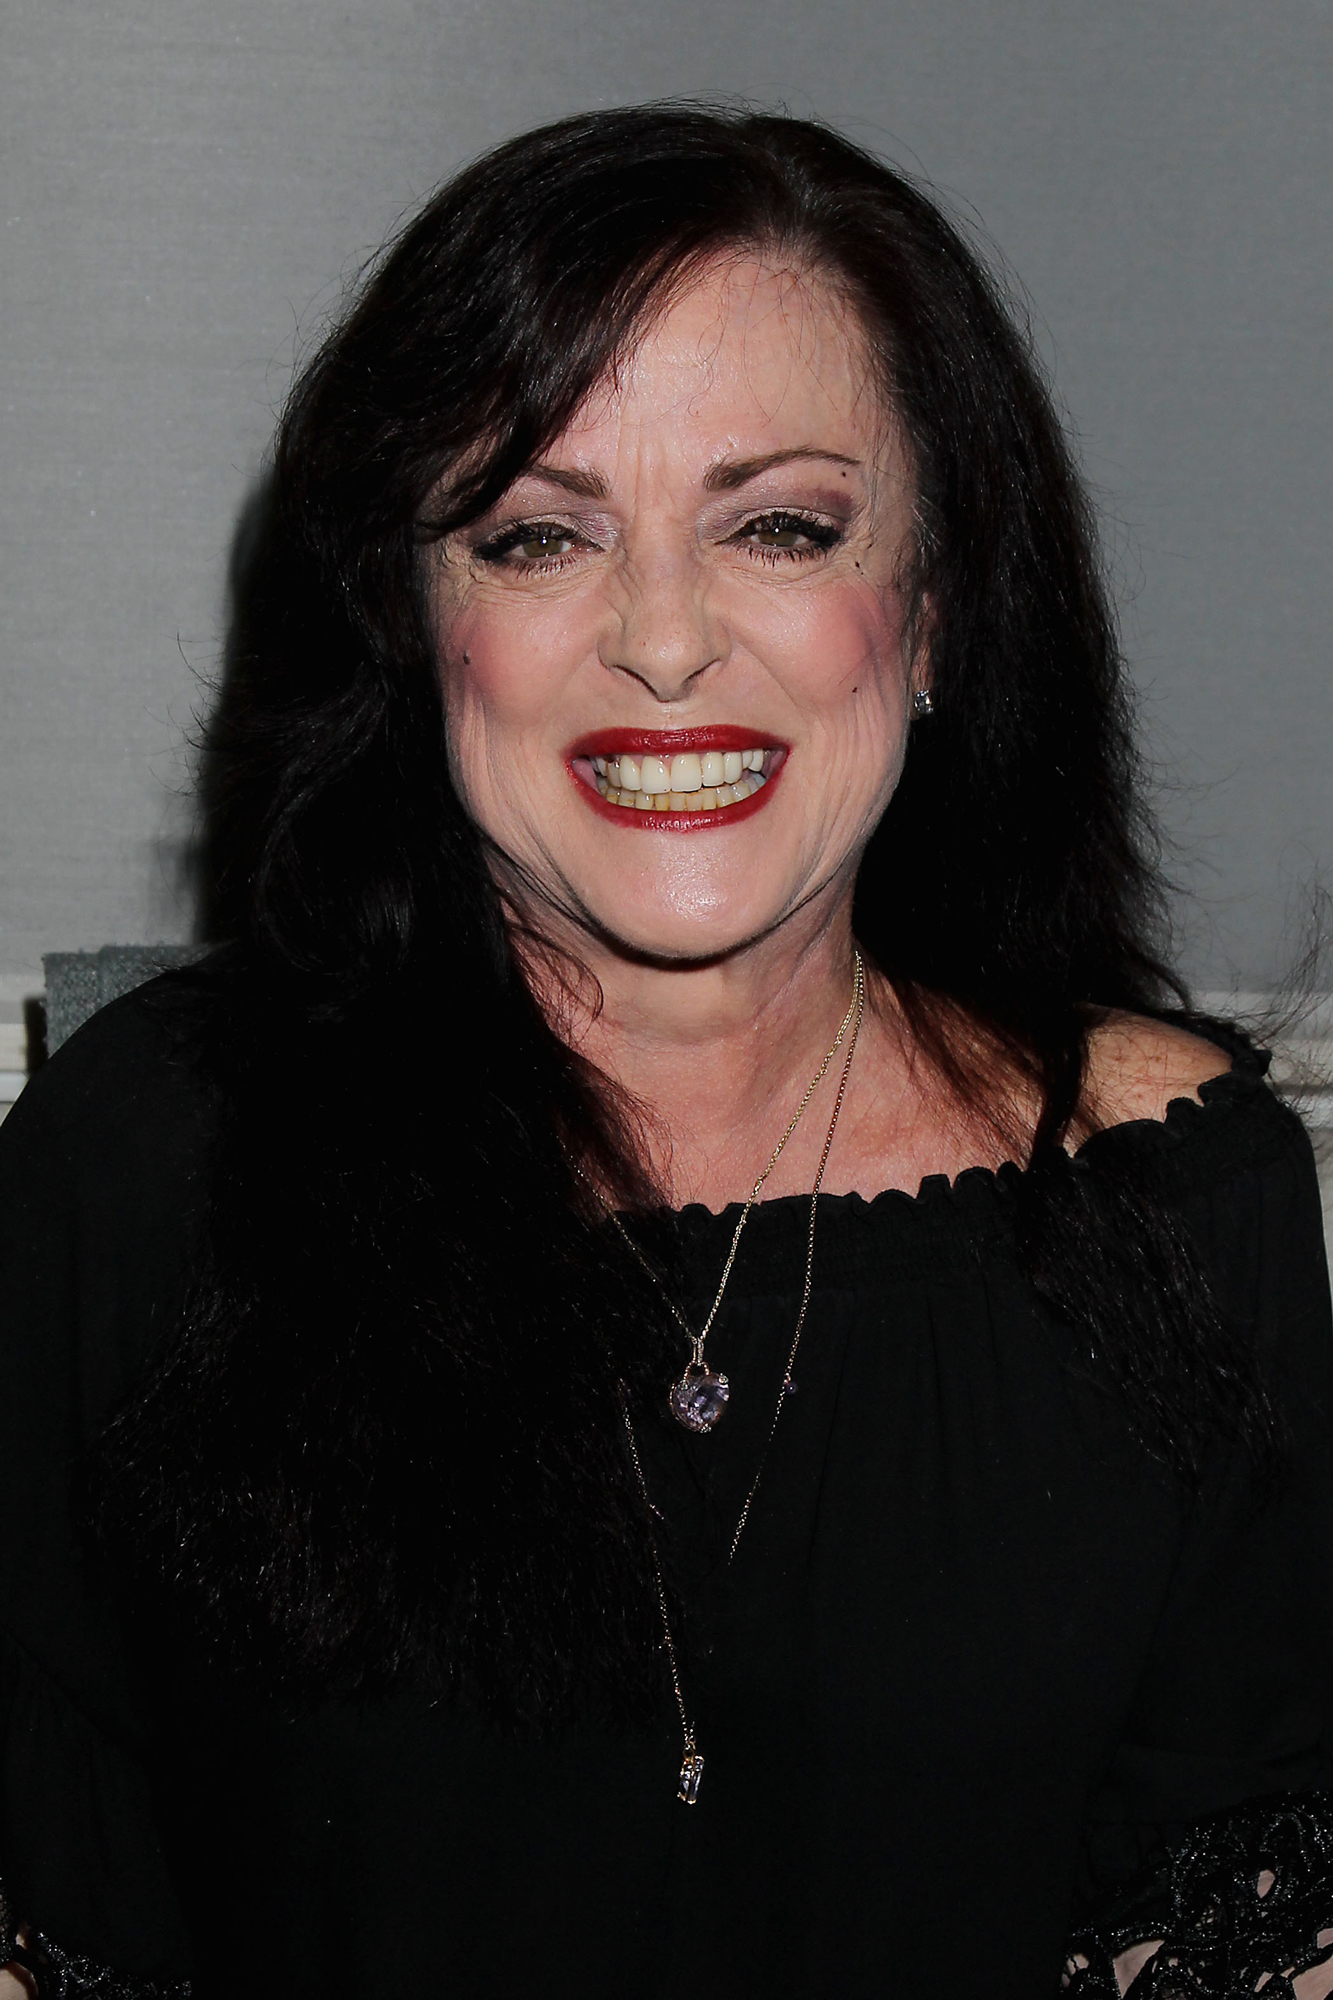 Lisa Loring, actress who played original Wednesday Addams, dies at